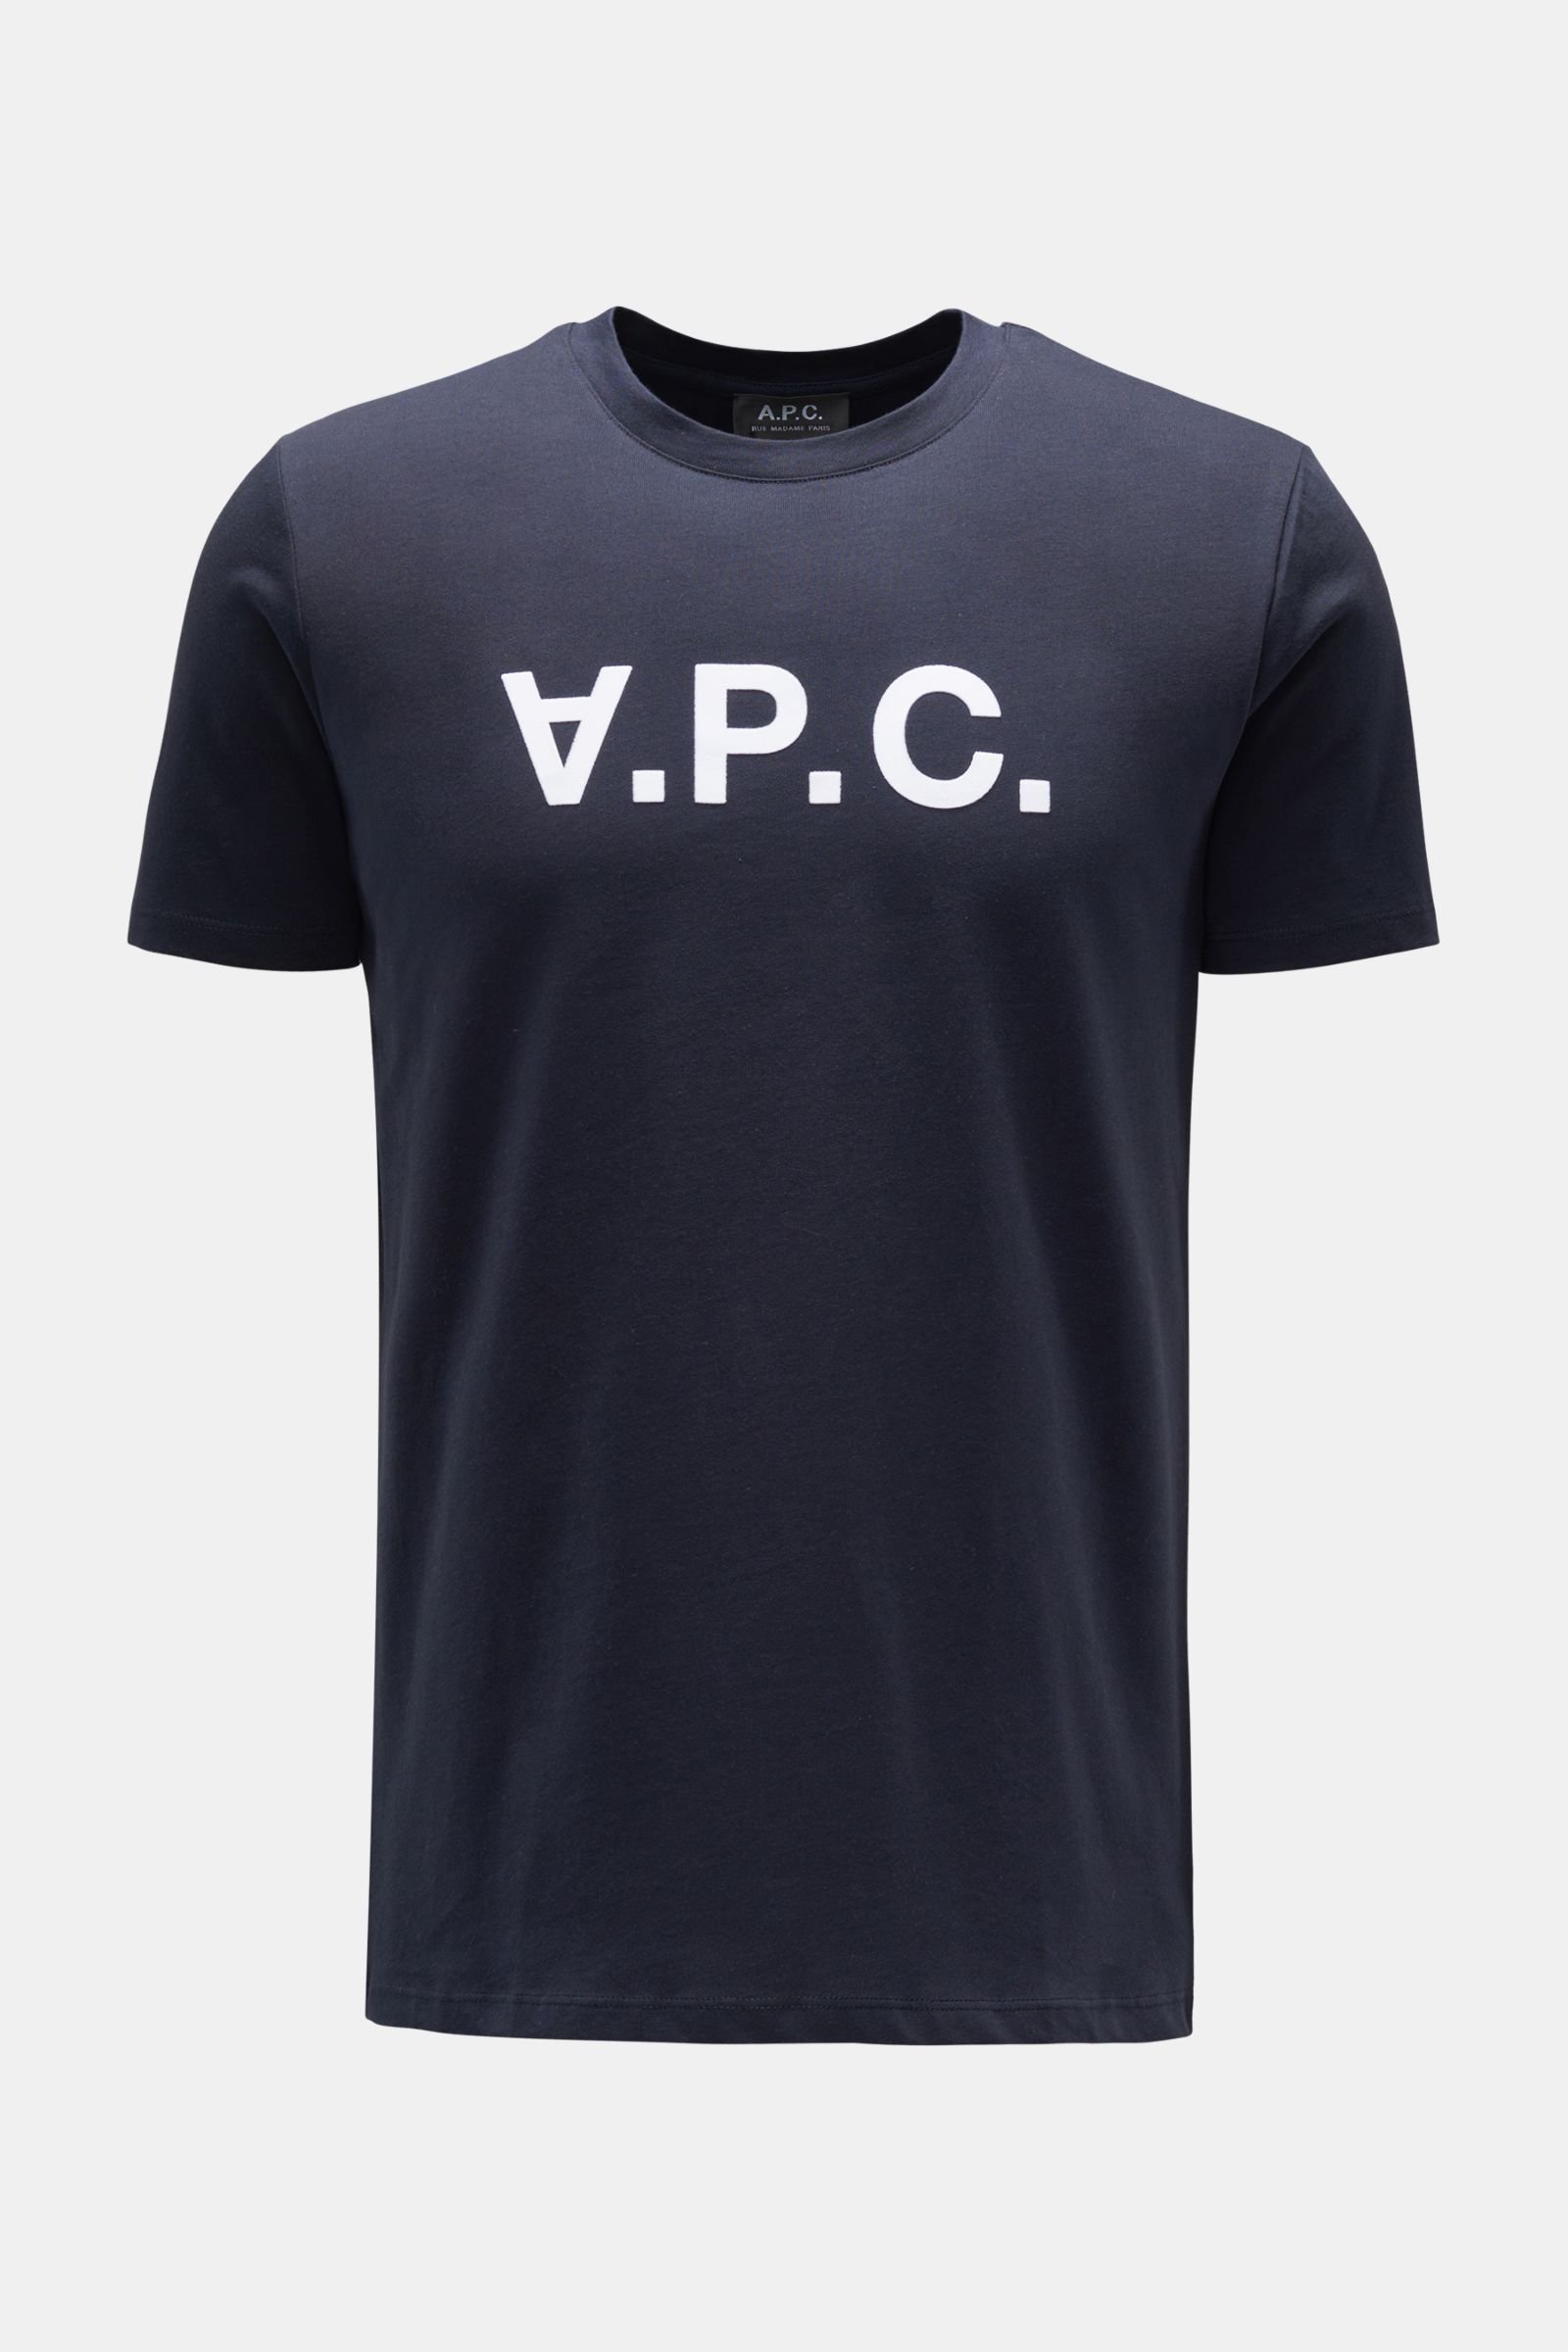 Crew neck T-shirt 'VPC' navy